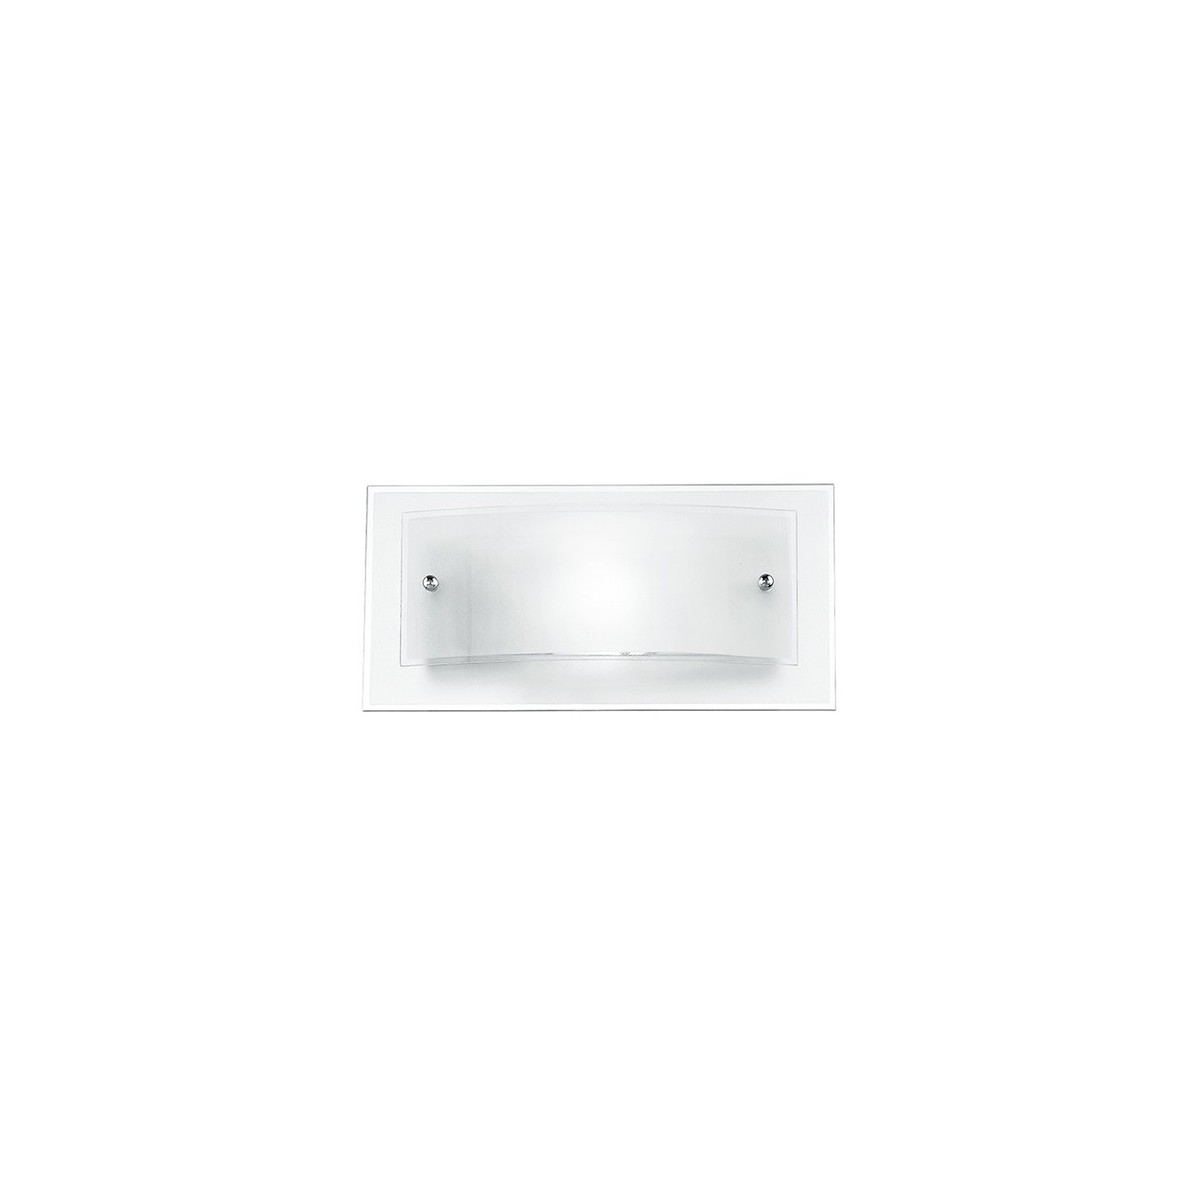 I-061228-3 - Applique Moderna Quadrata Doppio Vetro Bianco Satinato Bordo Trasparente Lampada da Parete E27